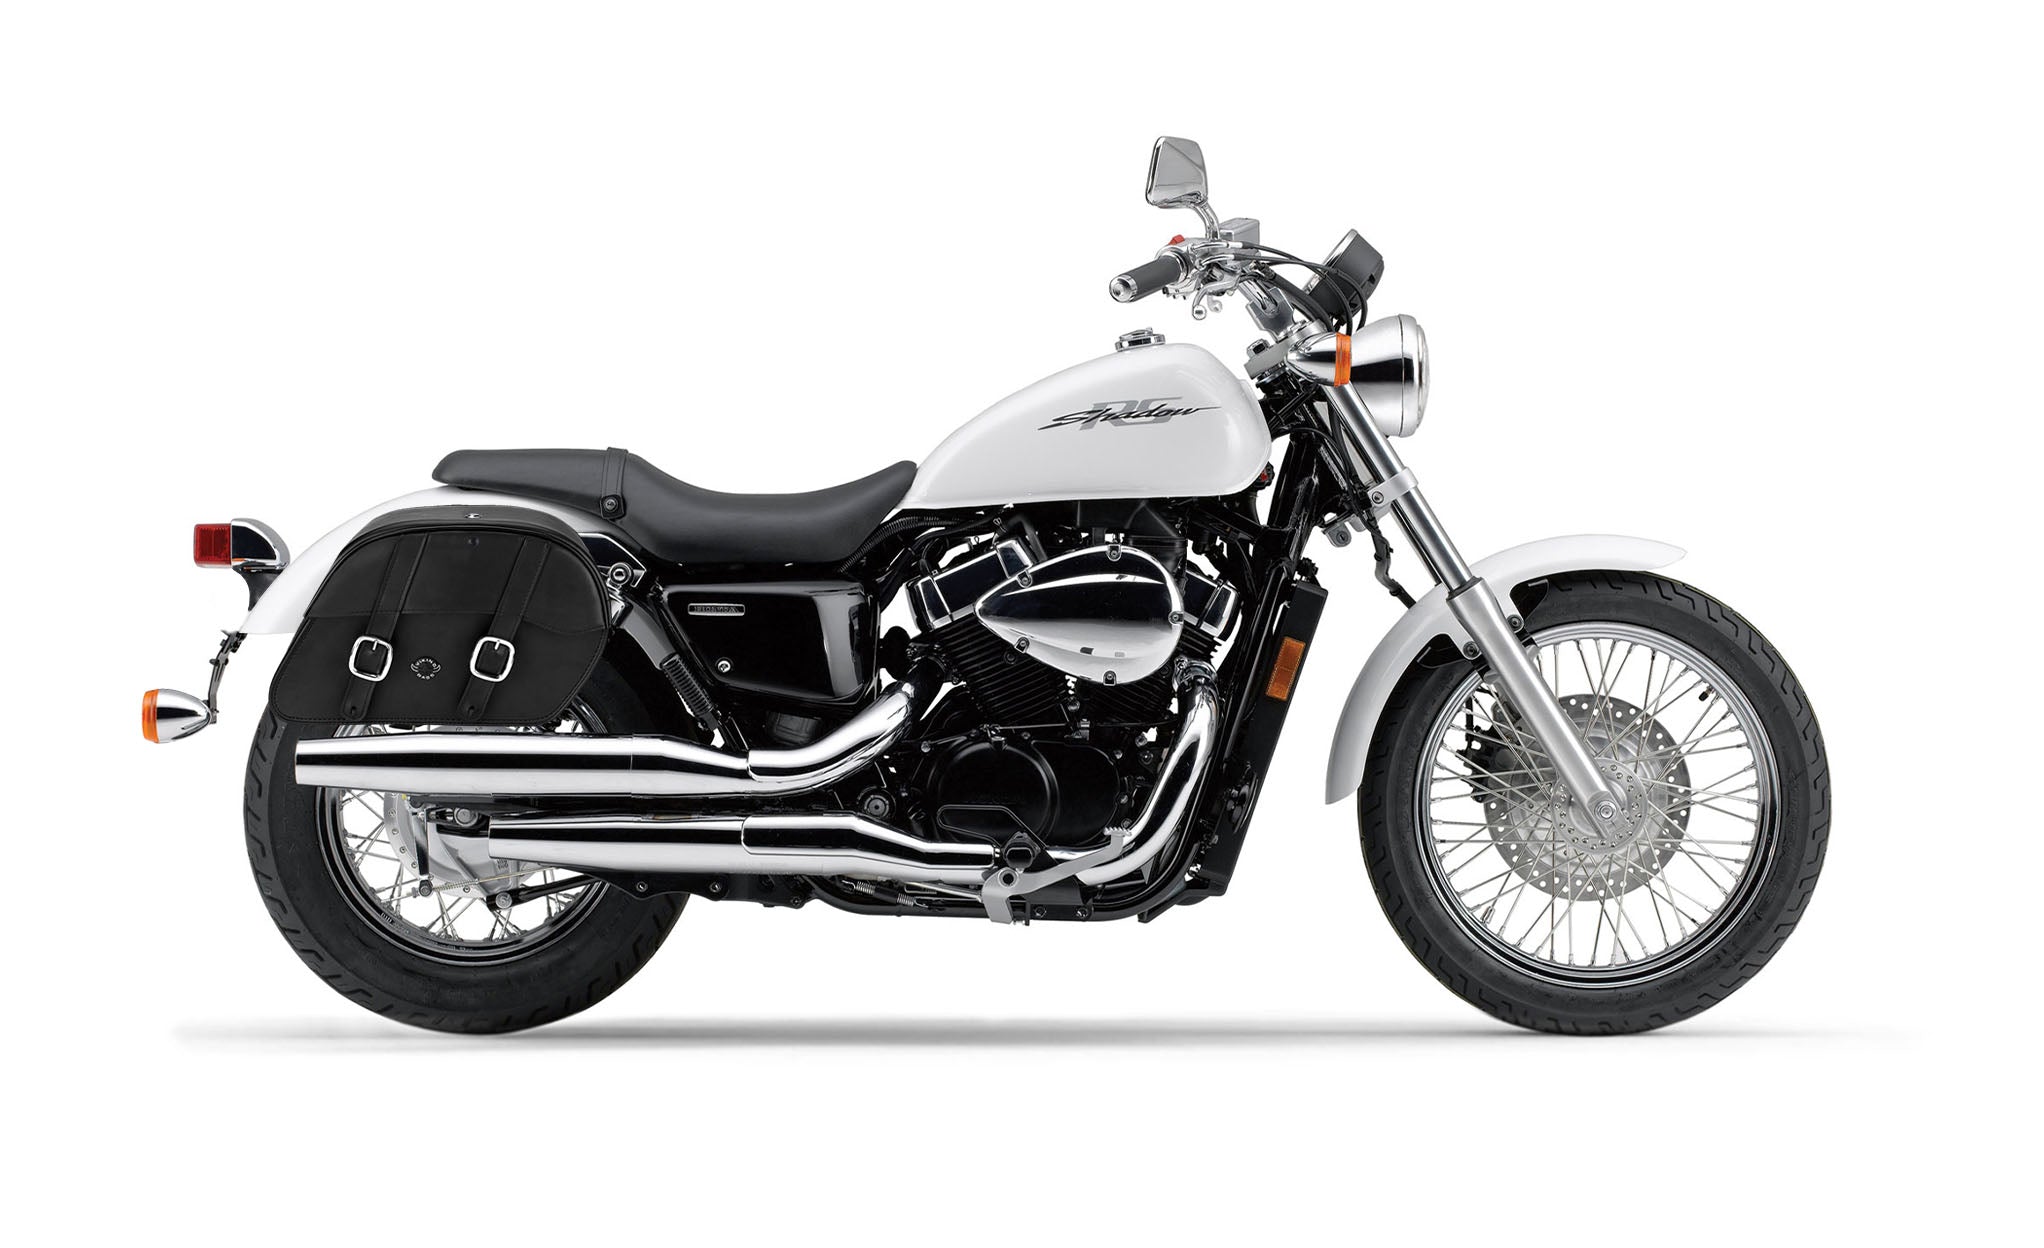 Viking Skarner Medium Lockable Honda Shadow 750 Rs Leather Motorcycle Saddlebags on Bike Photo @expand